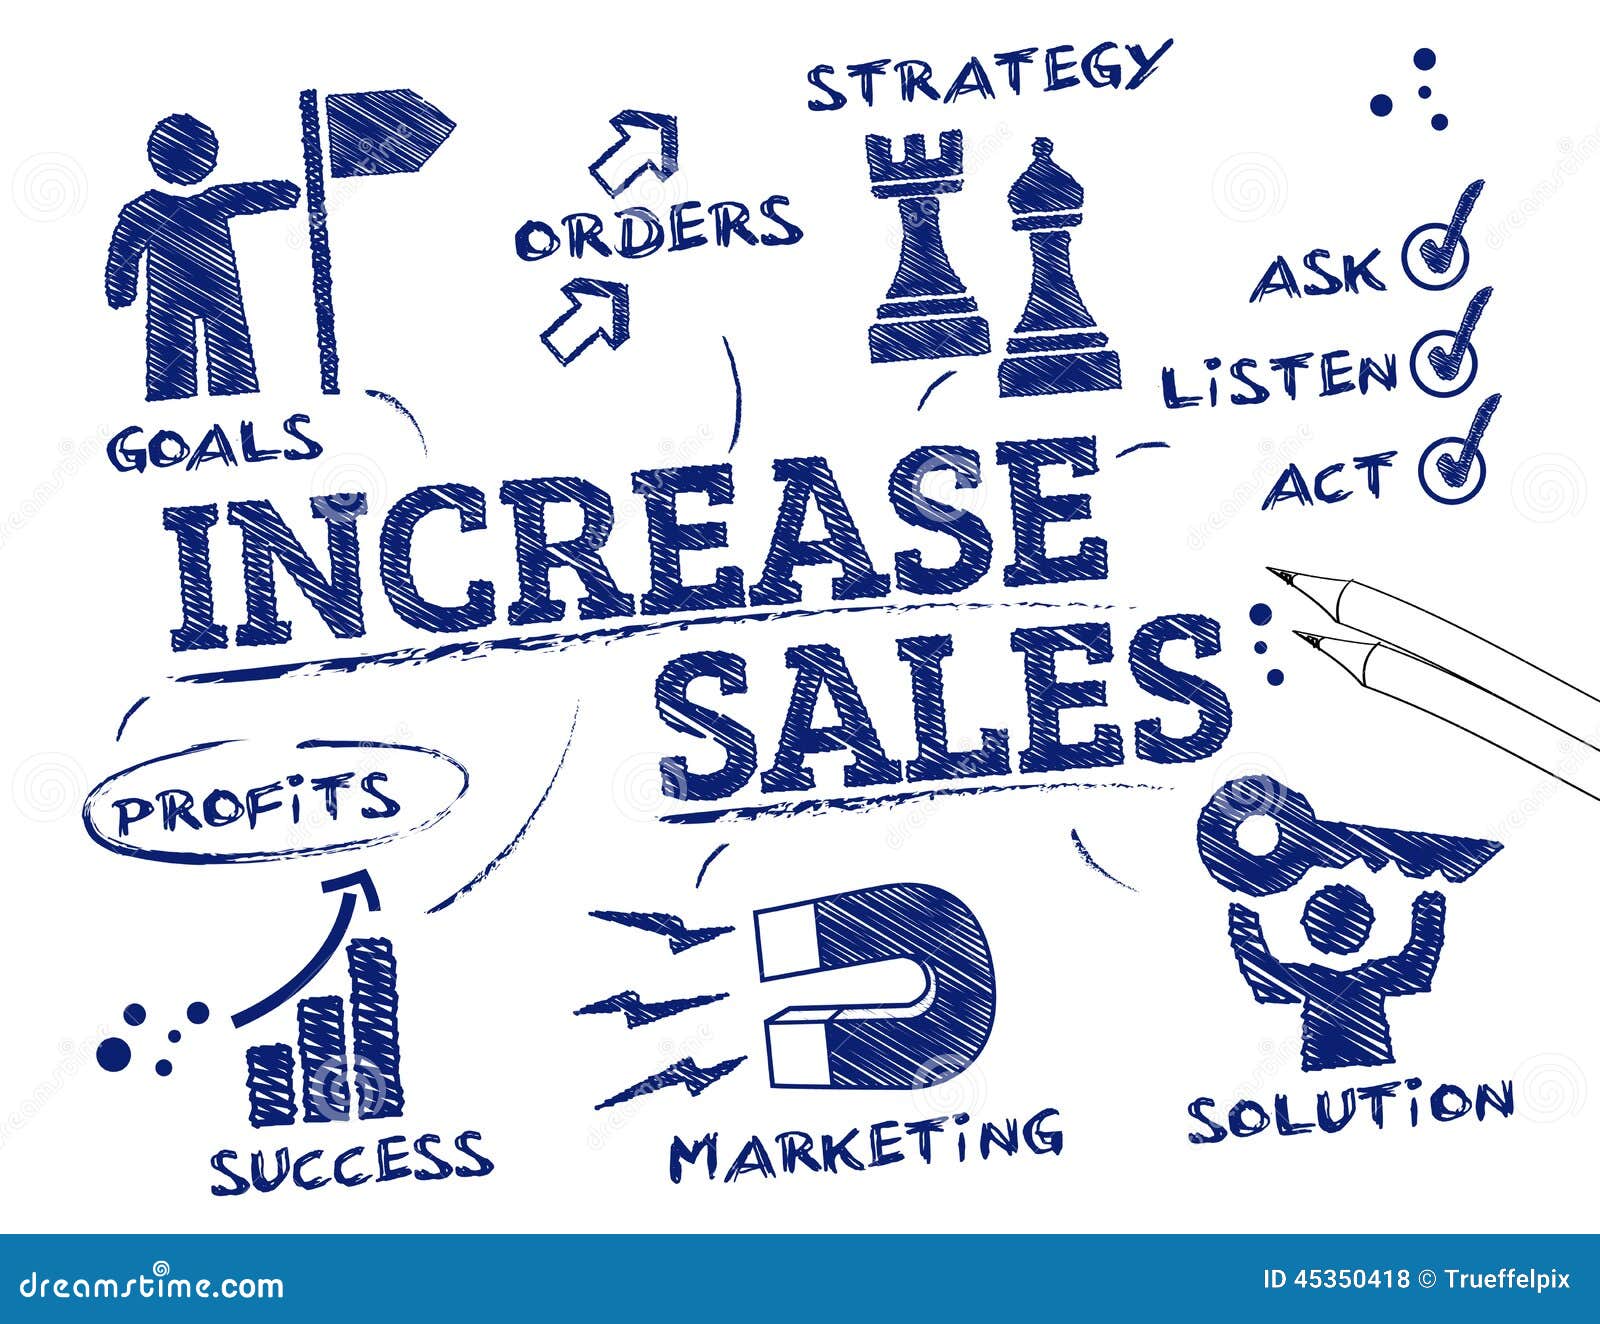 Sales Increase Chart